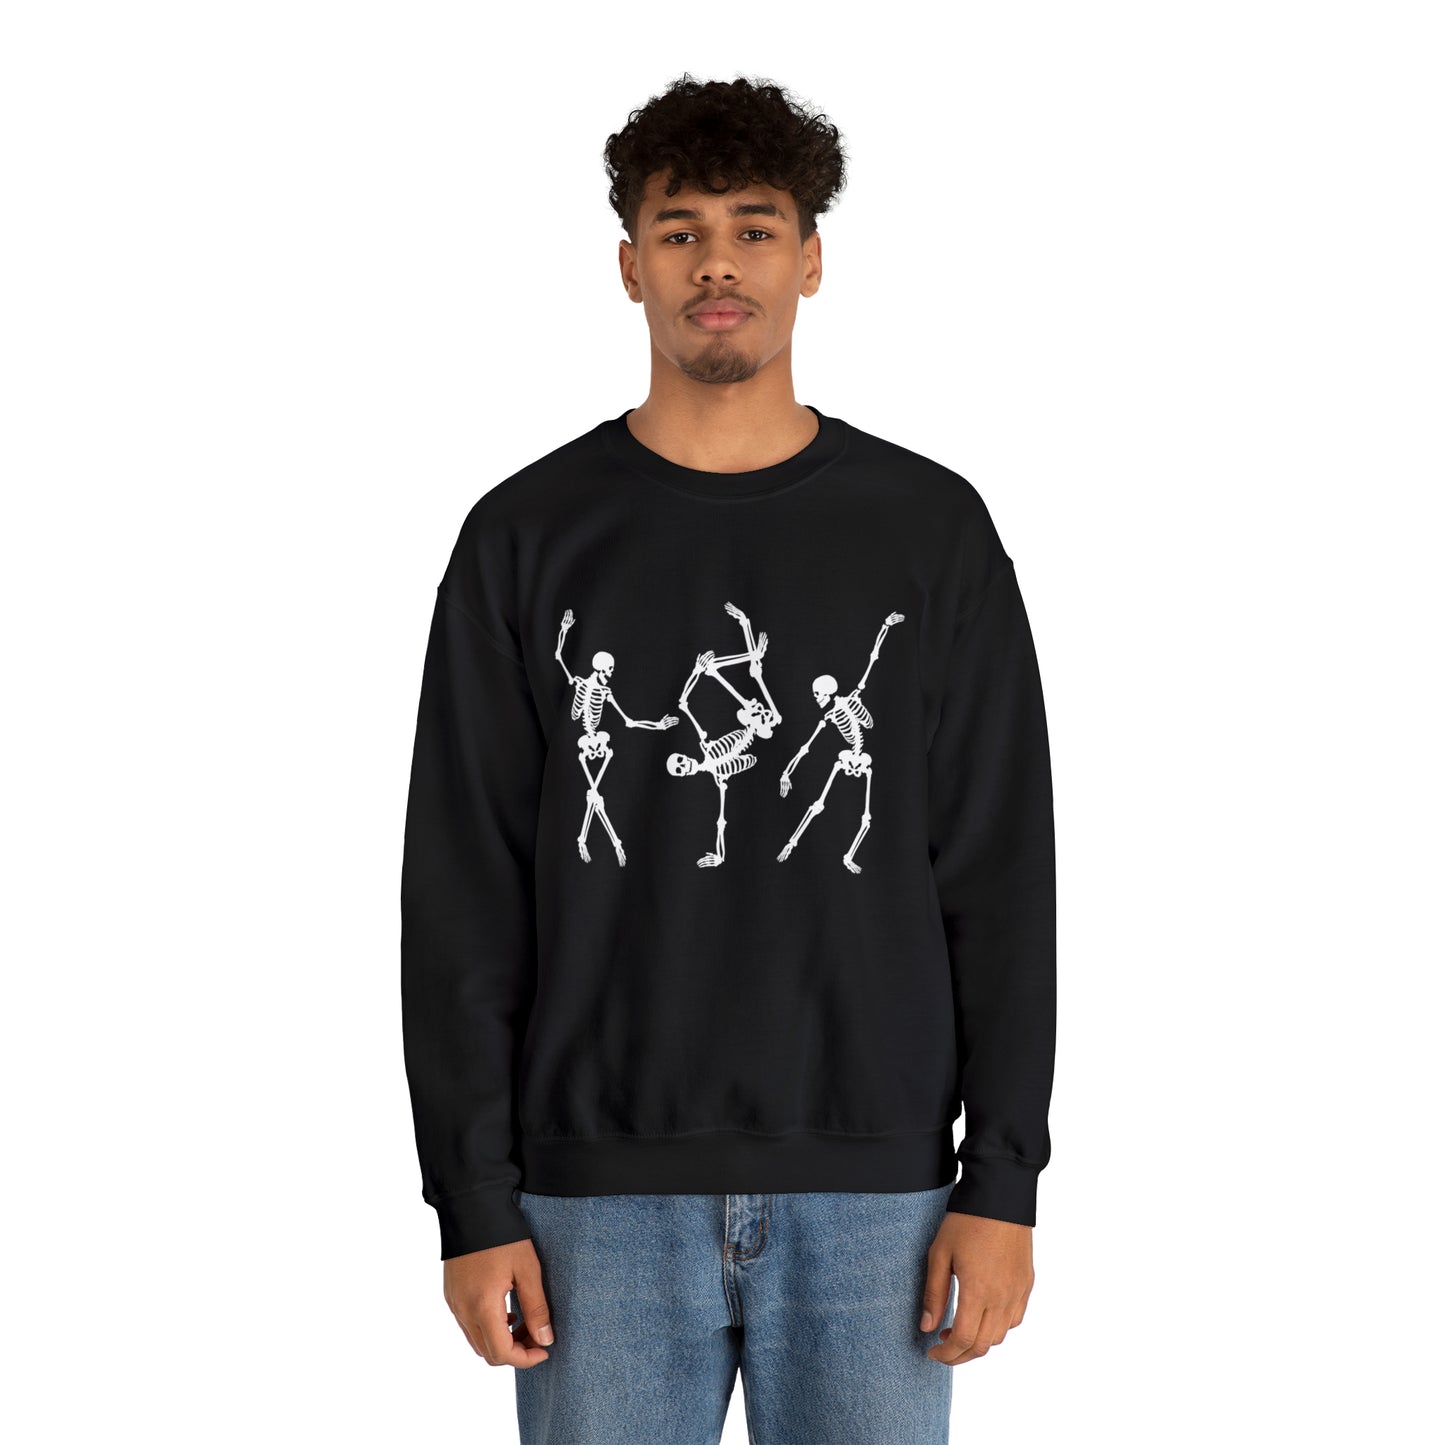 Dancing Skeleton Sweatshirt, Funny Halloween Sweatshirt for Women, Spooky Season Sweater Weather Shirt Gift for Her, Fall T-shirt